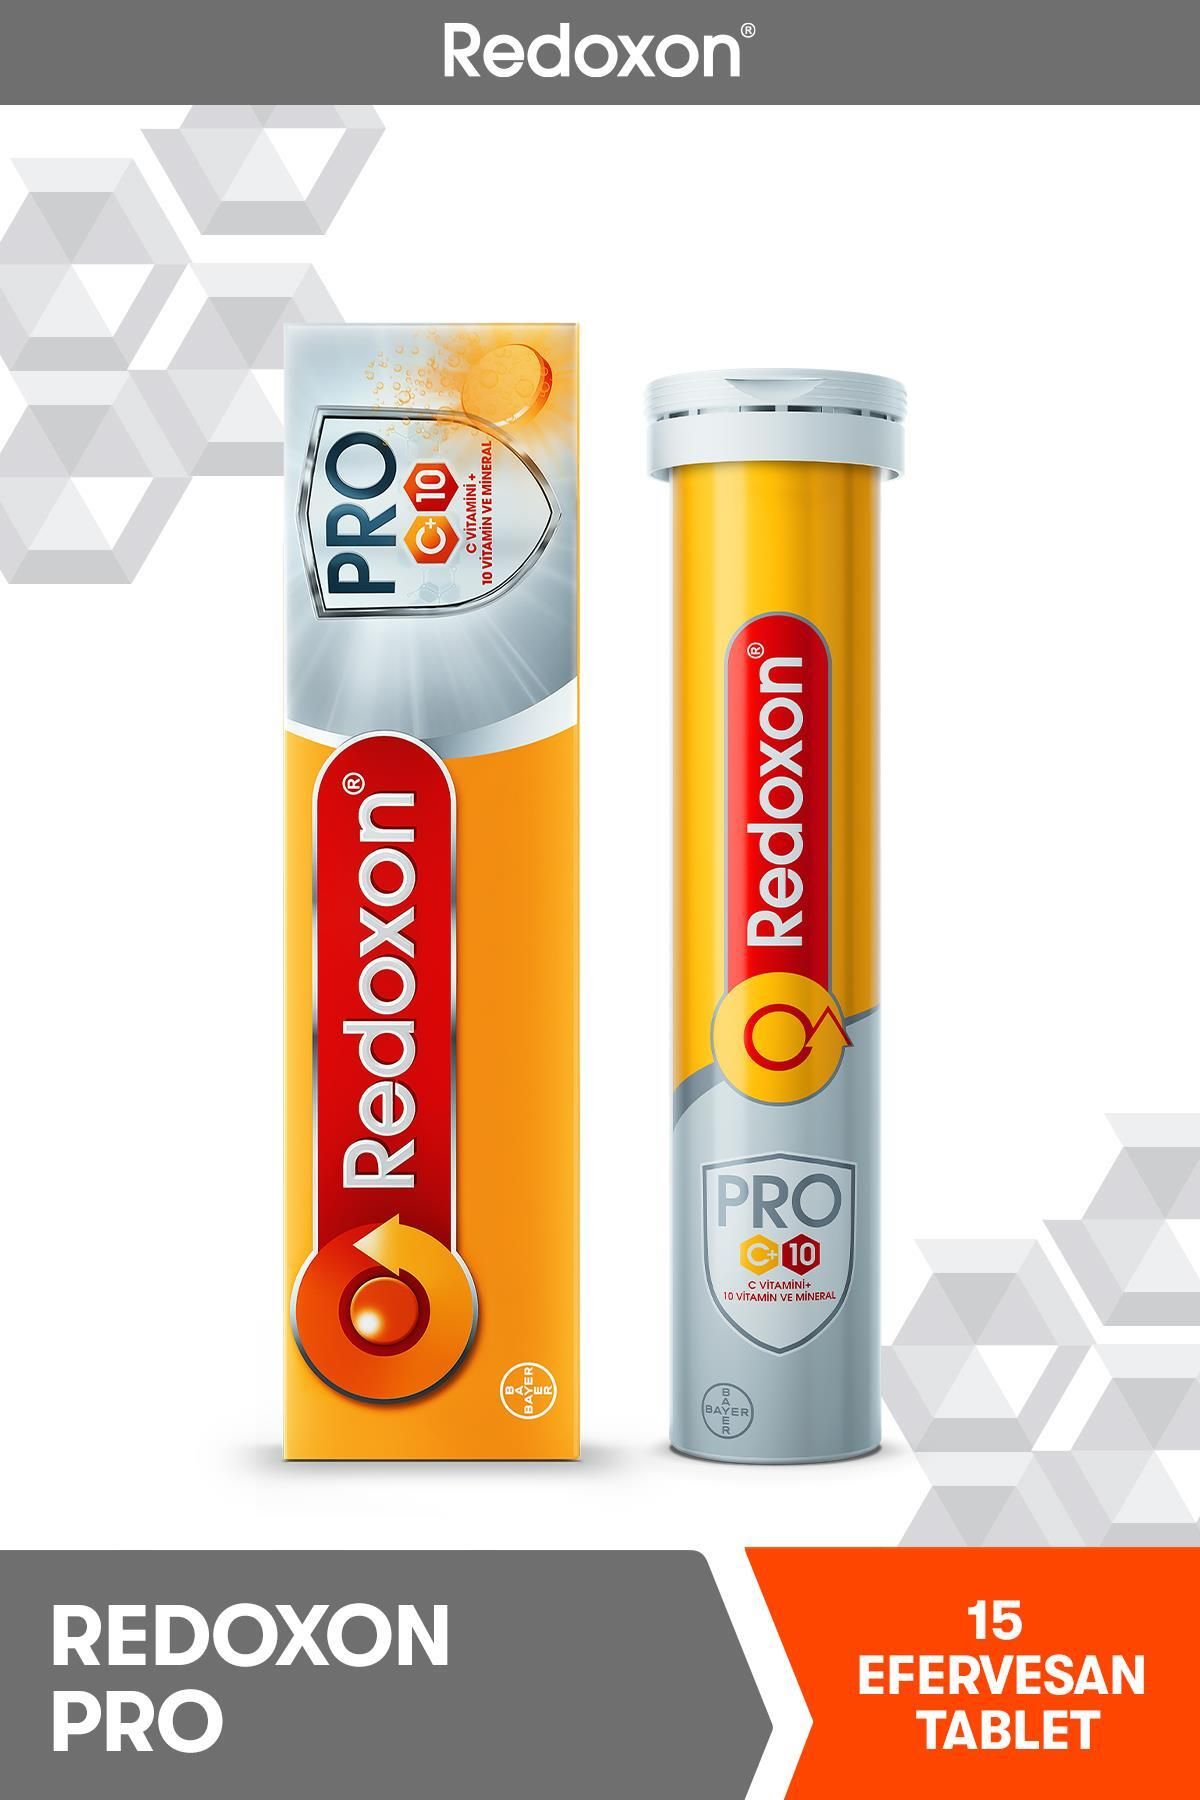 Redoxon Pro 15 Efervesan Tablet I 1000 C Vitamini, D Vitamini, Selenyum Ve Çinkoya Ek 7 Vitamin Ve M